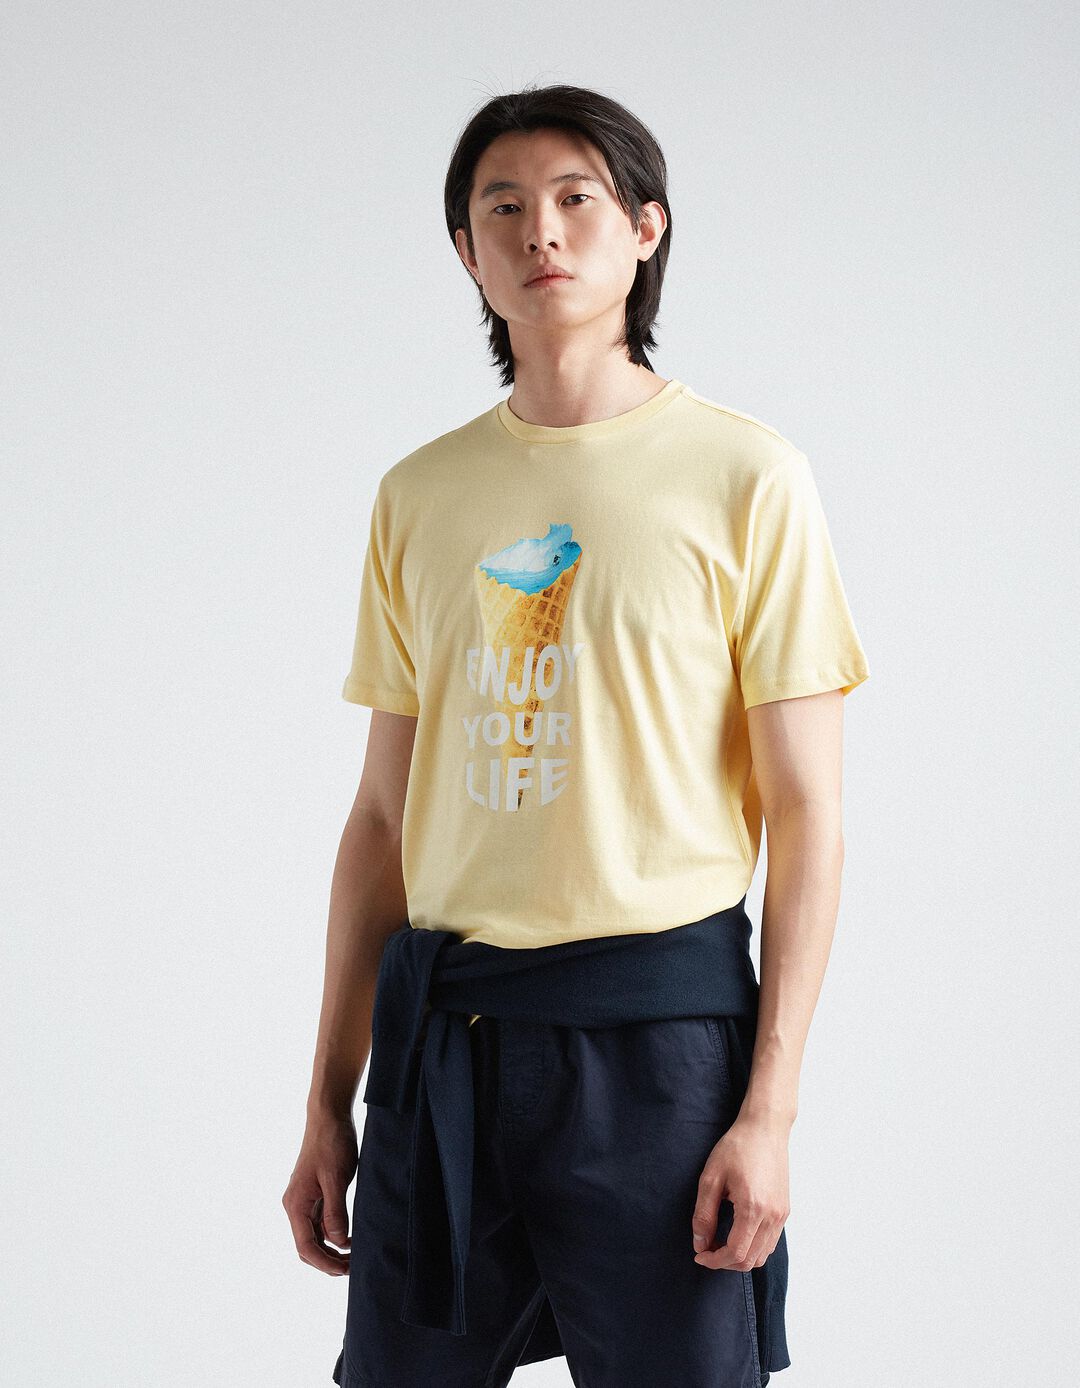 T-shirt, Men, Yellow